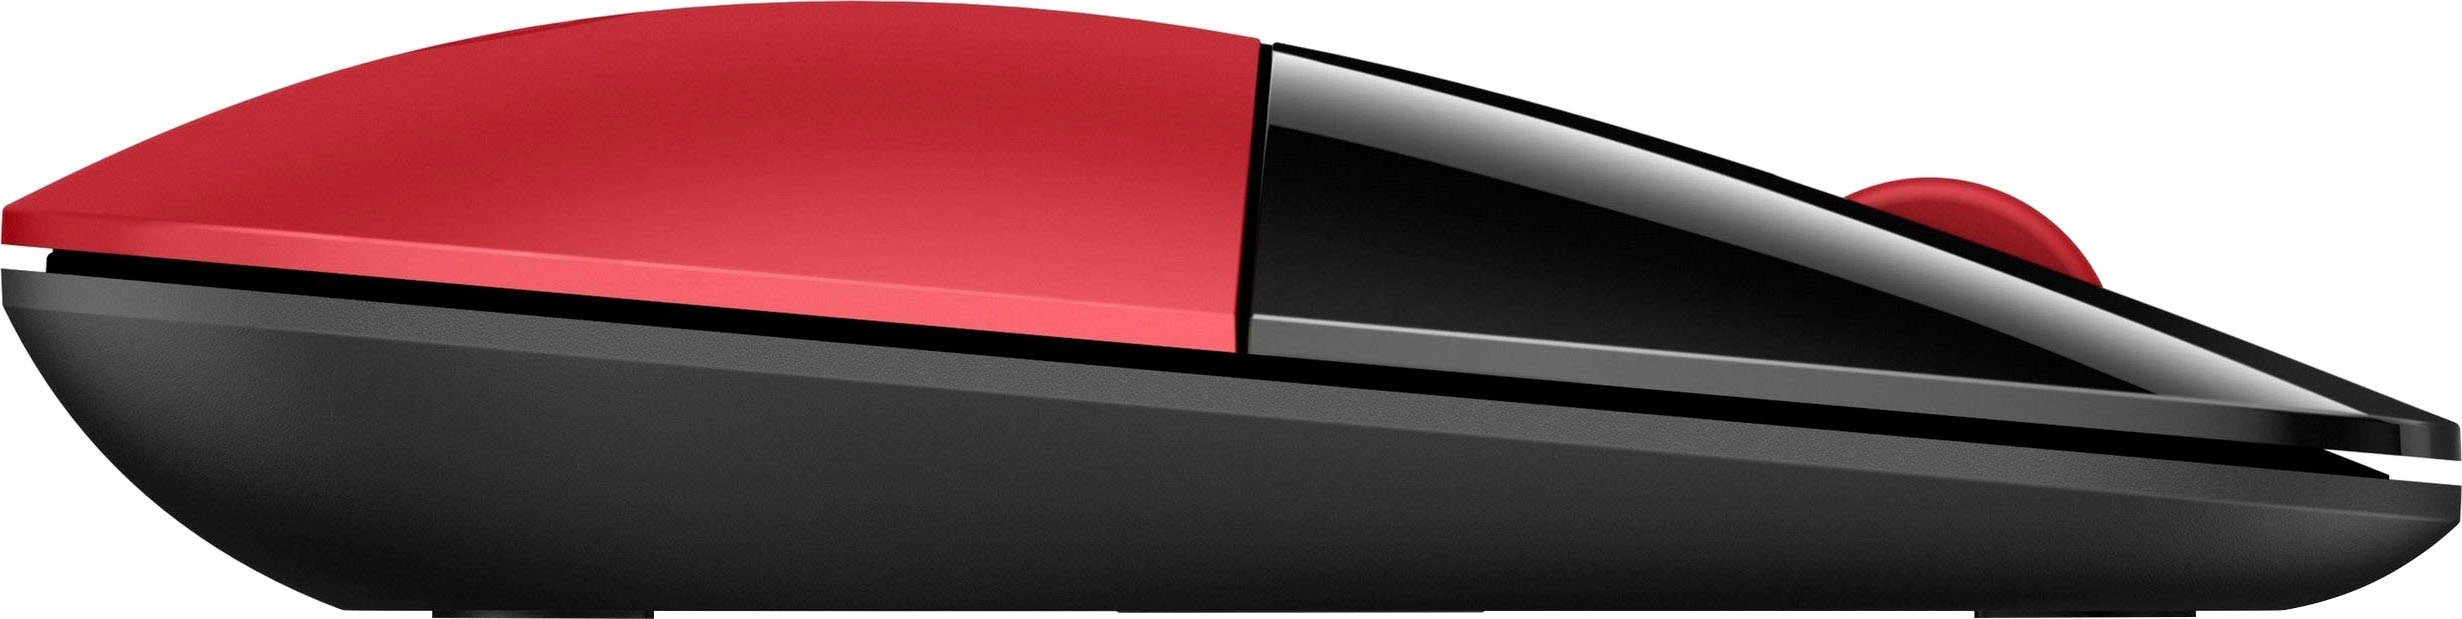 HP Maus Z3700 schwarz/rot